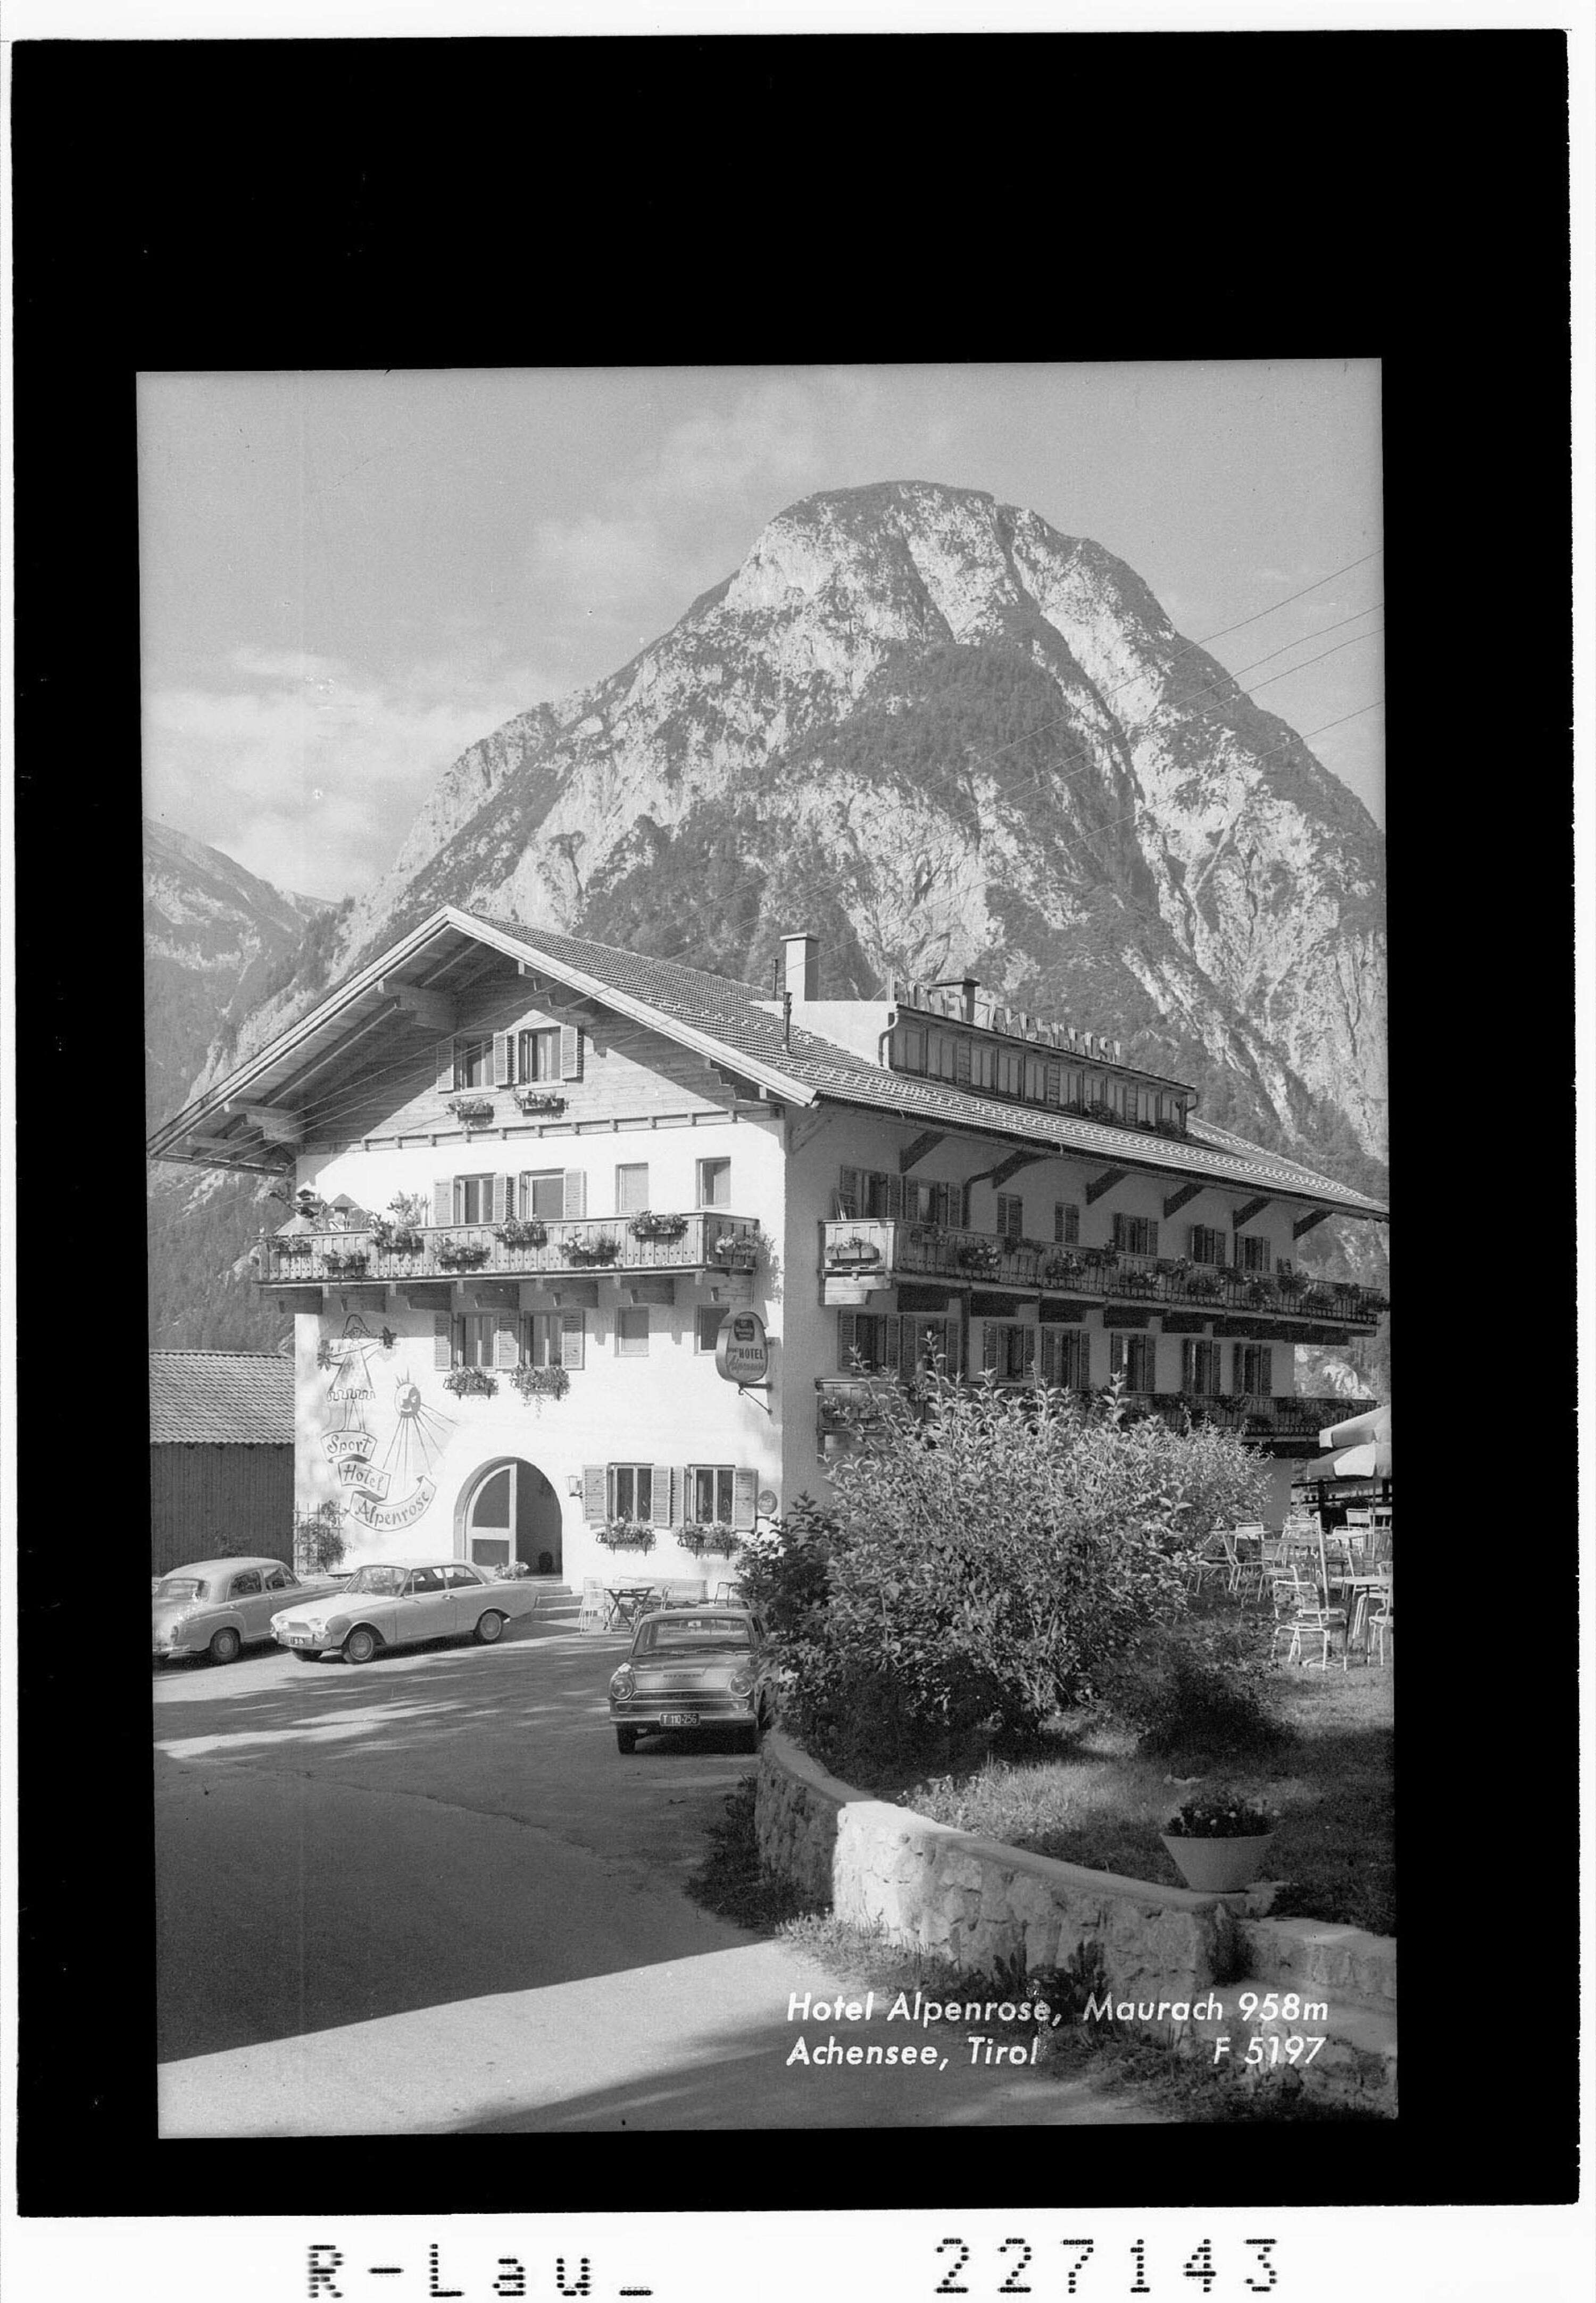 Hotel Alpenrose / Maurach 958 m / Achensee / Tirol></div>


    <hr>
    <div class=